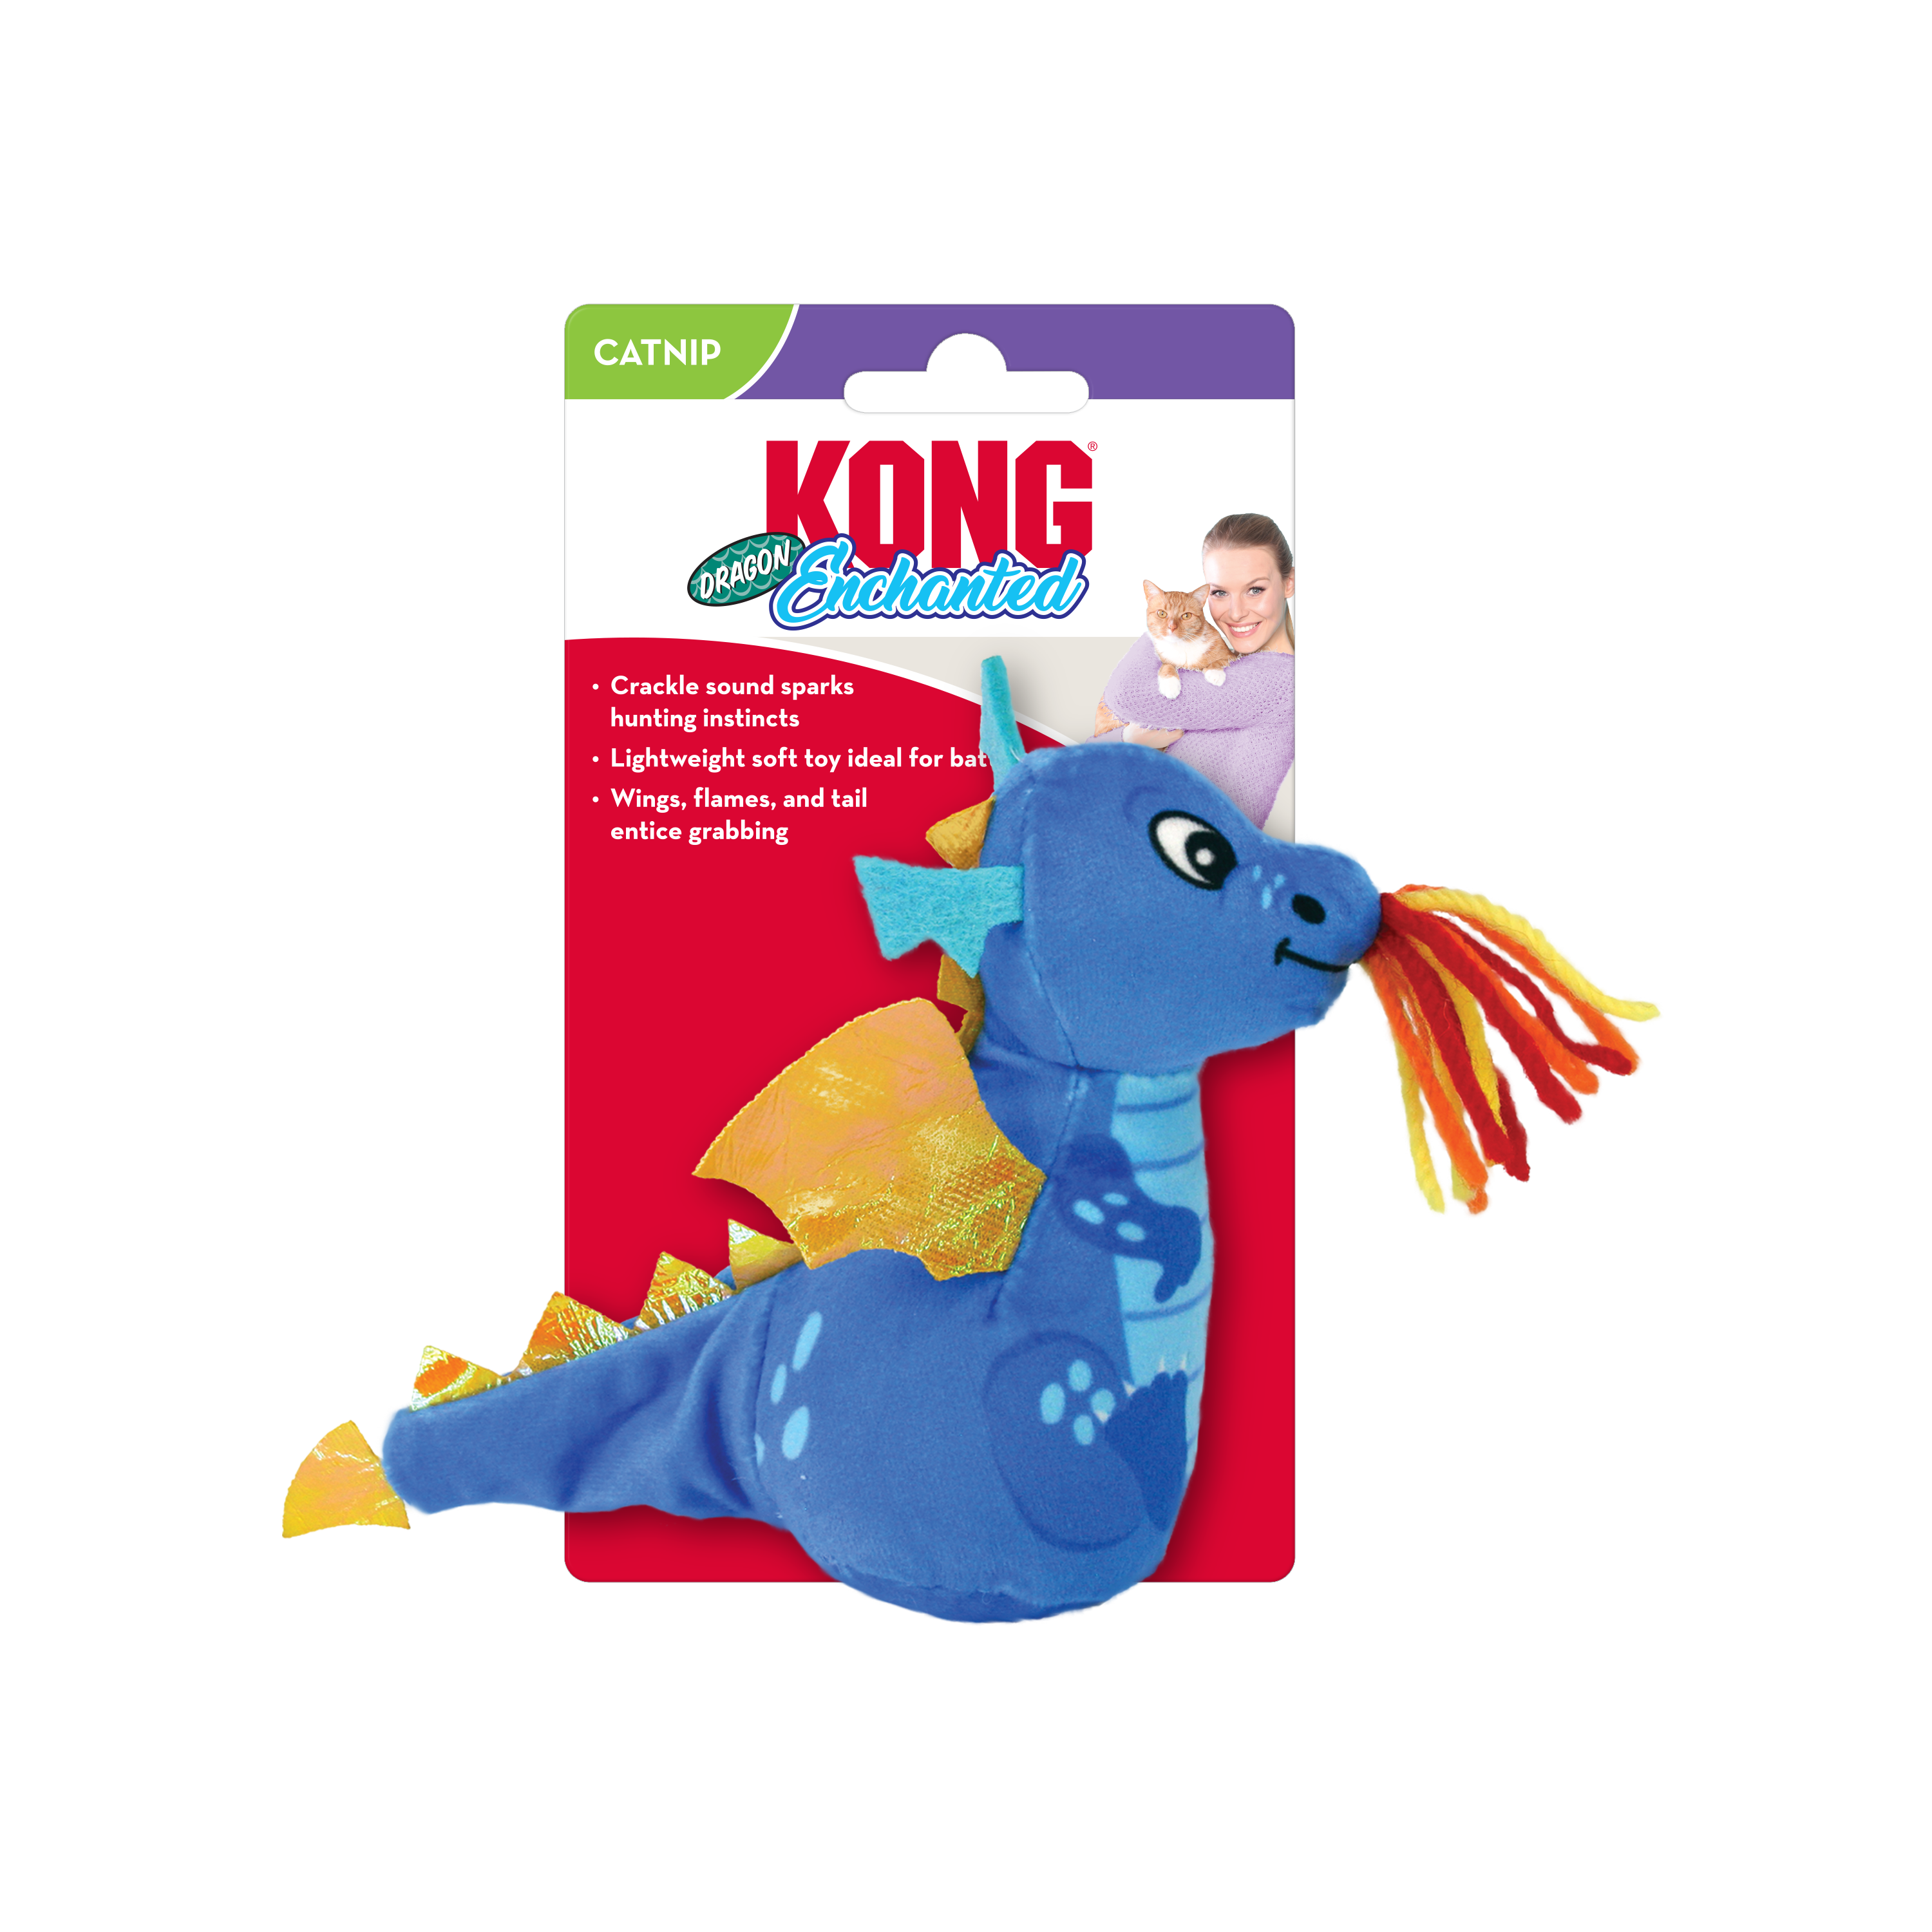 Enchanted Dragon onpack product image